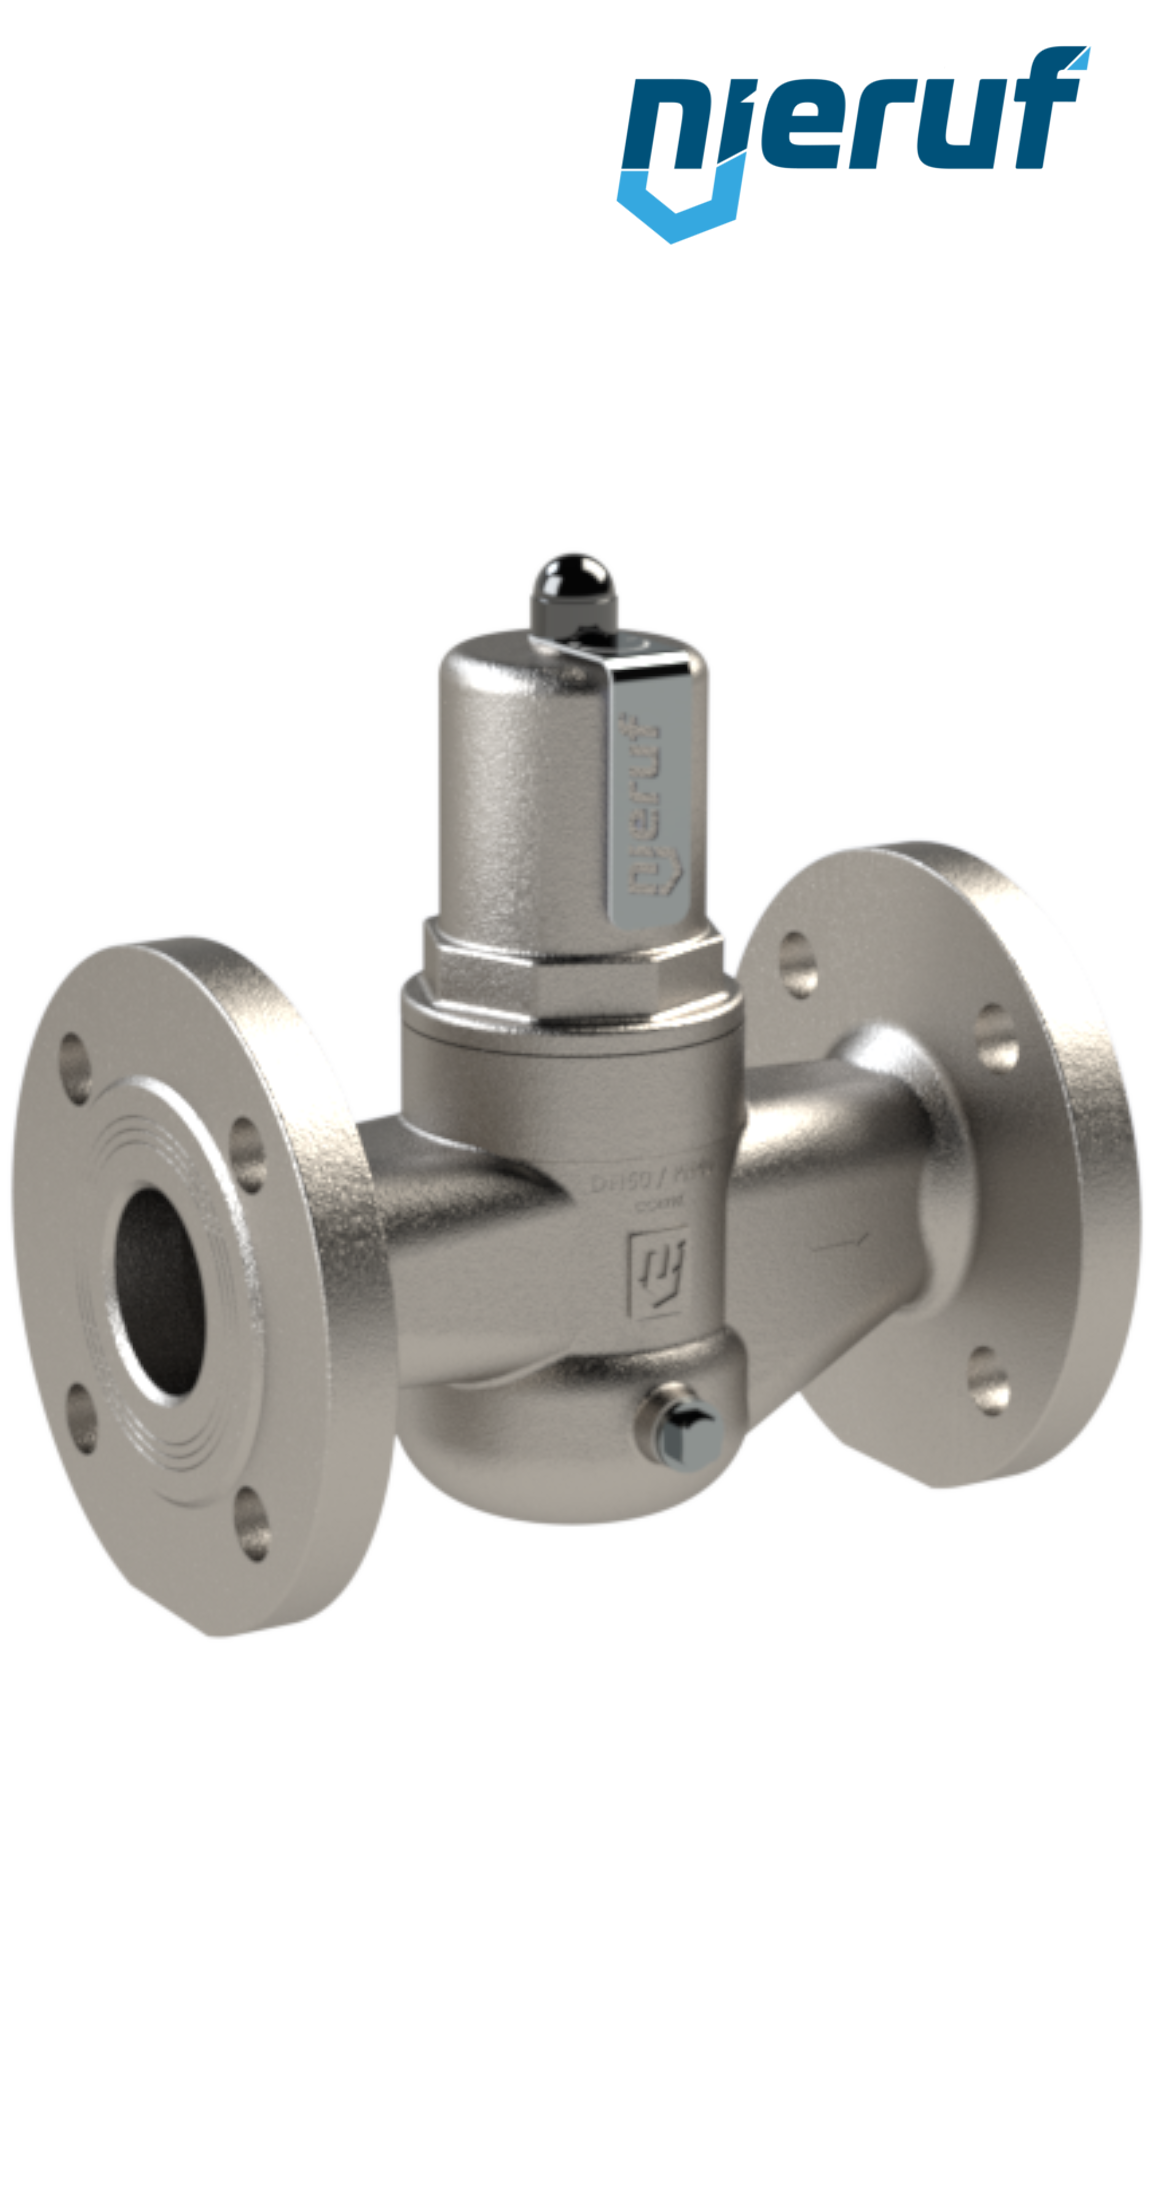 Flange-pressure reducing valve DN 50 PN40 DM08 stainless steel FKM 5.0 - 15.0 bar